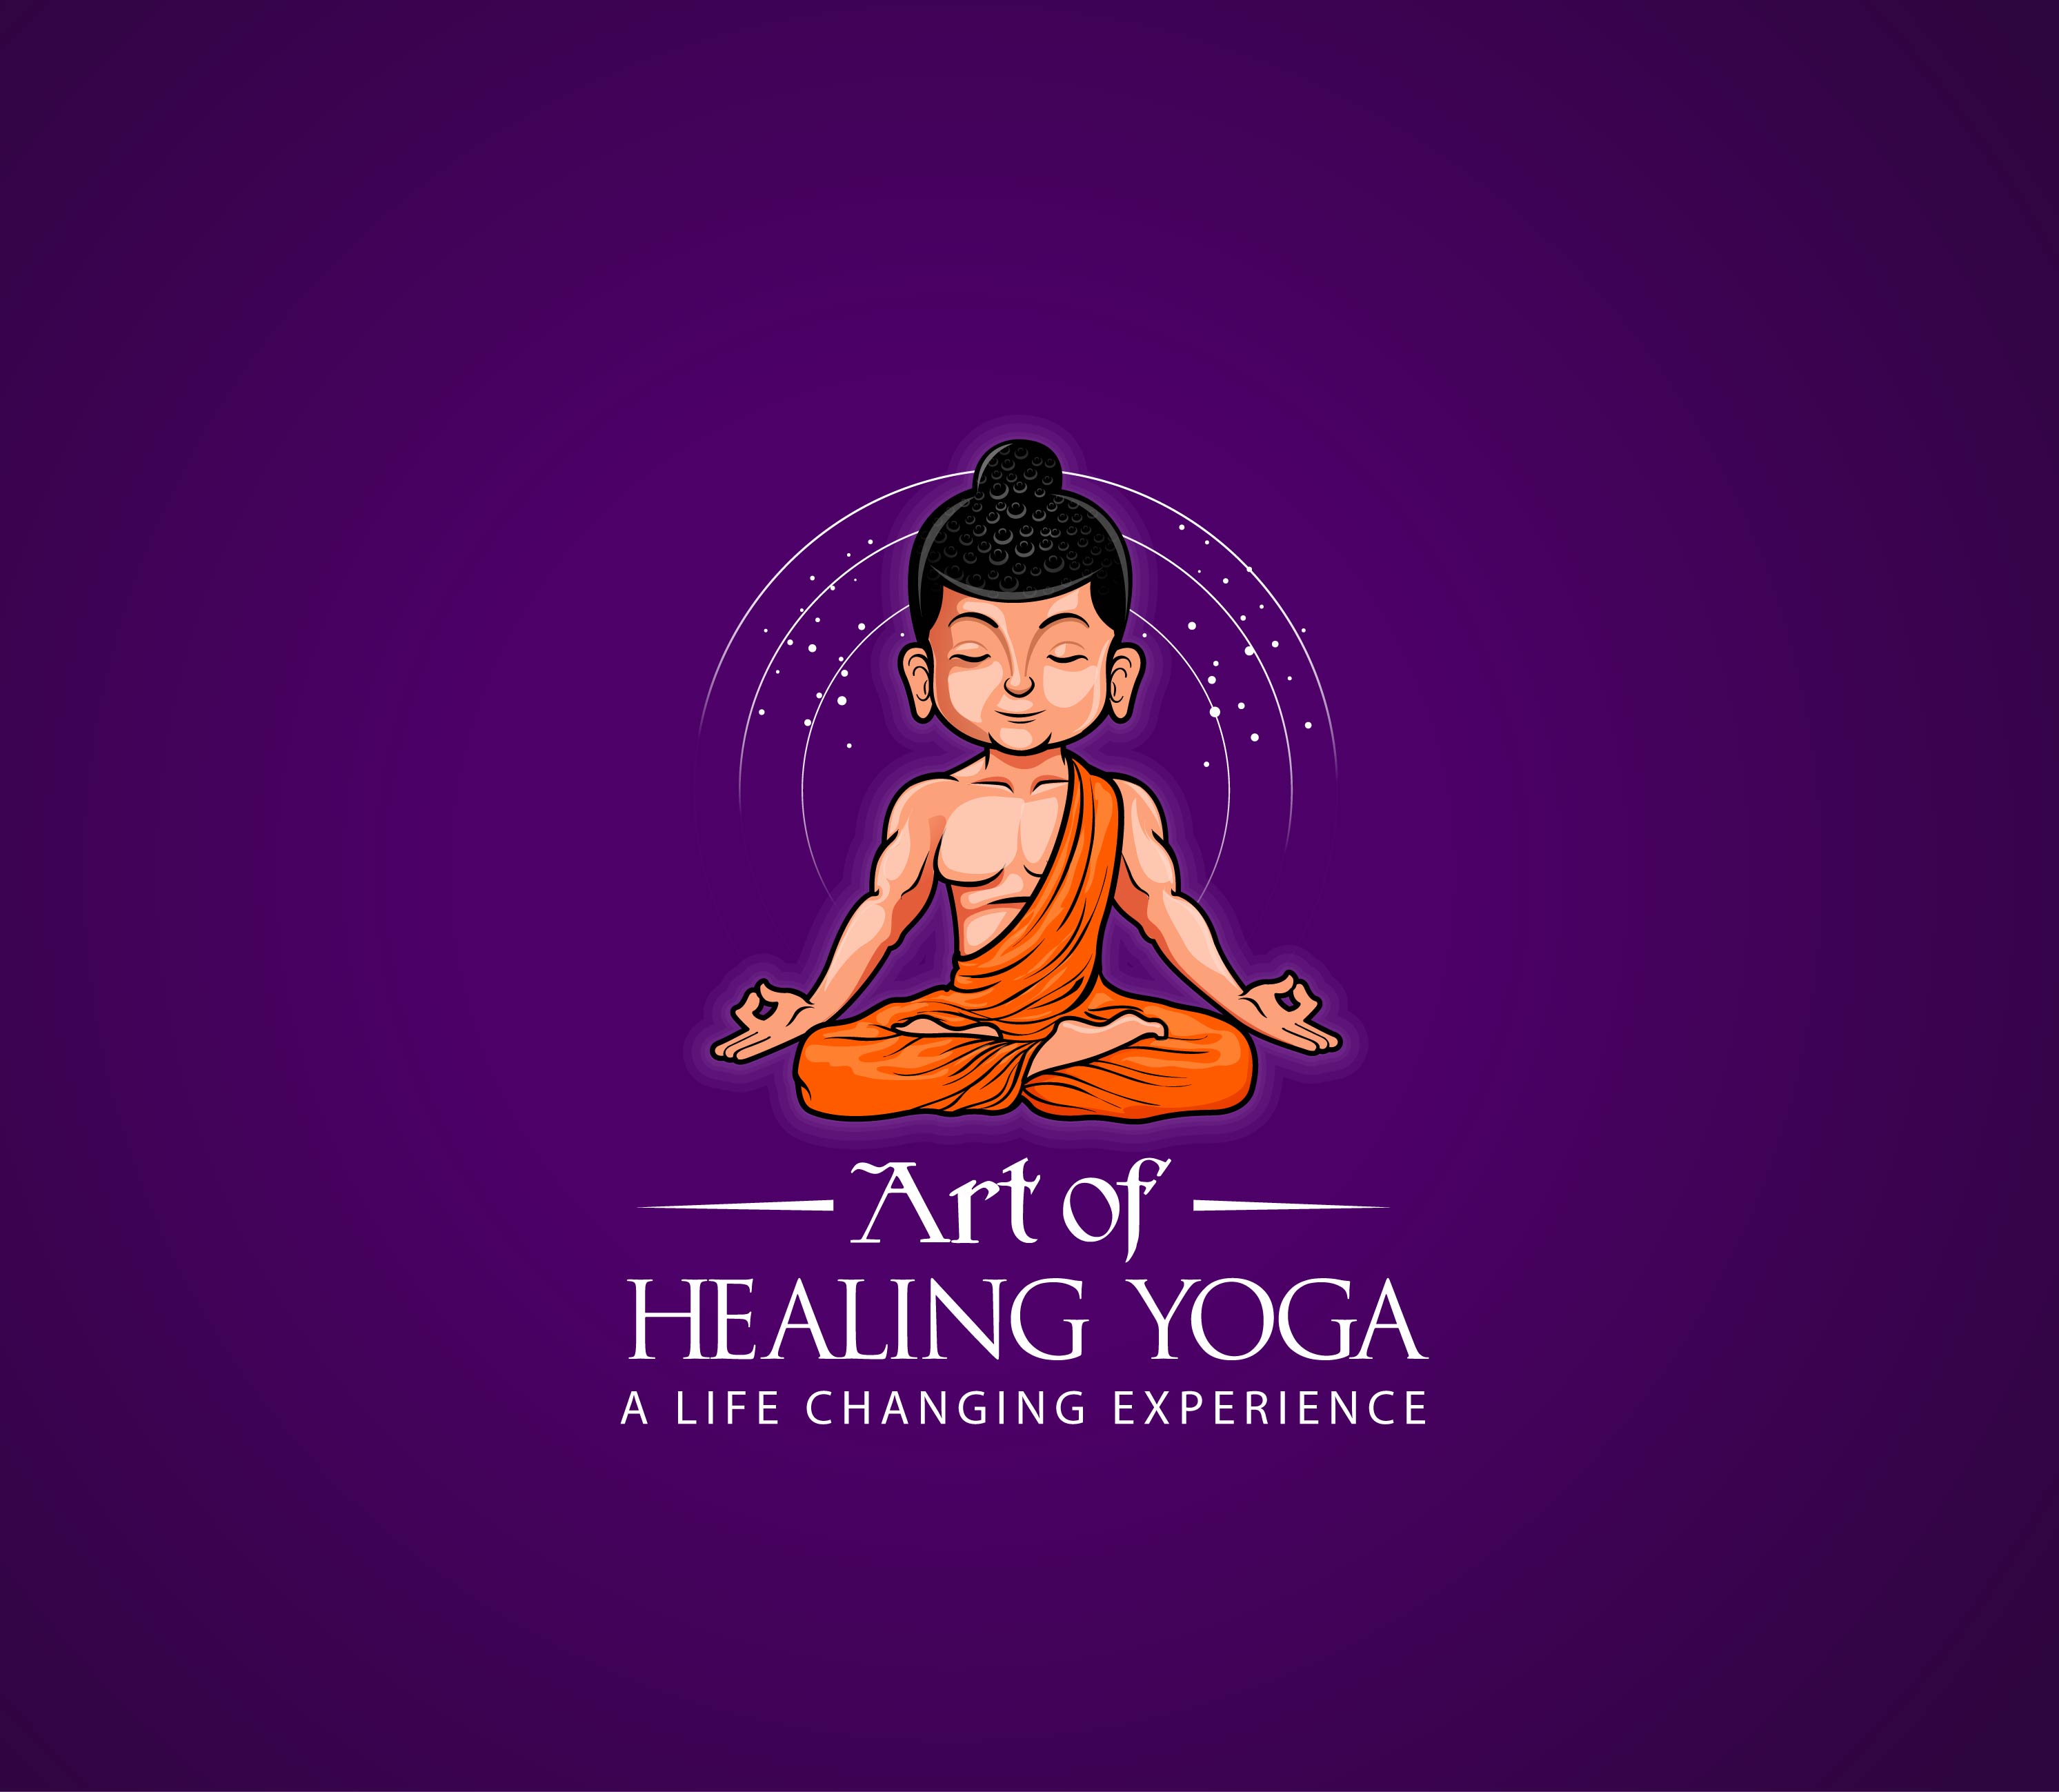   Art of  Healing yoga